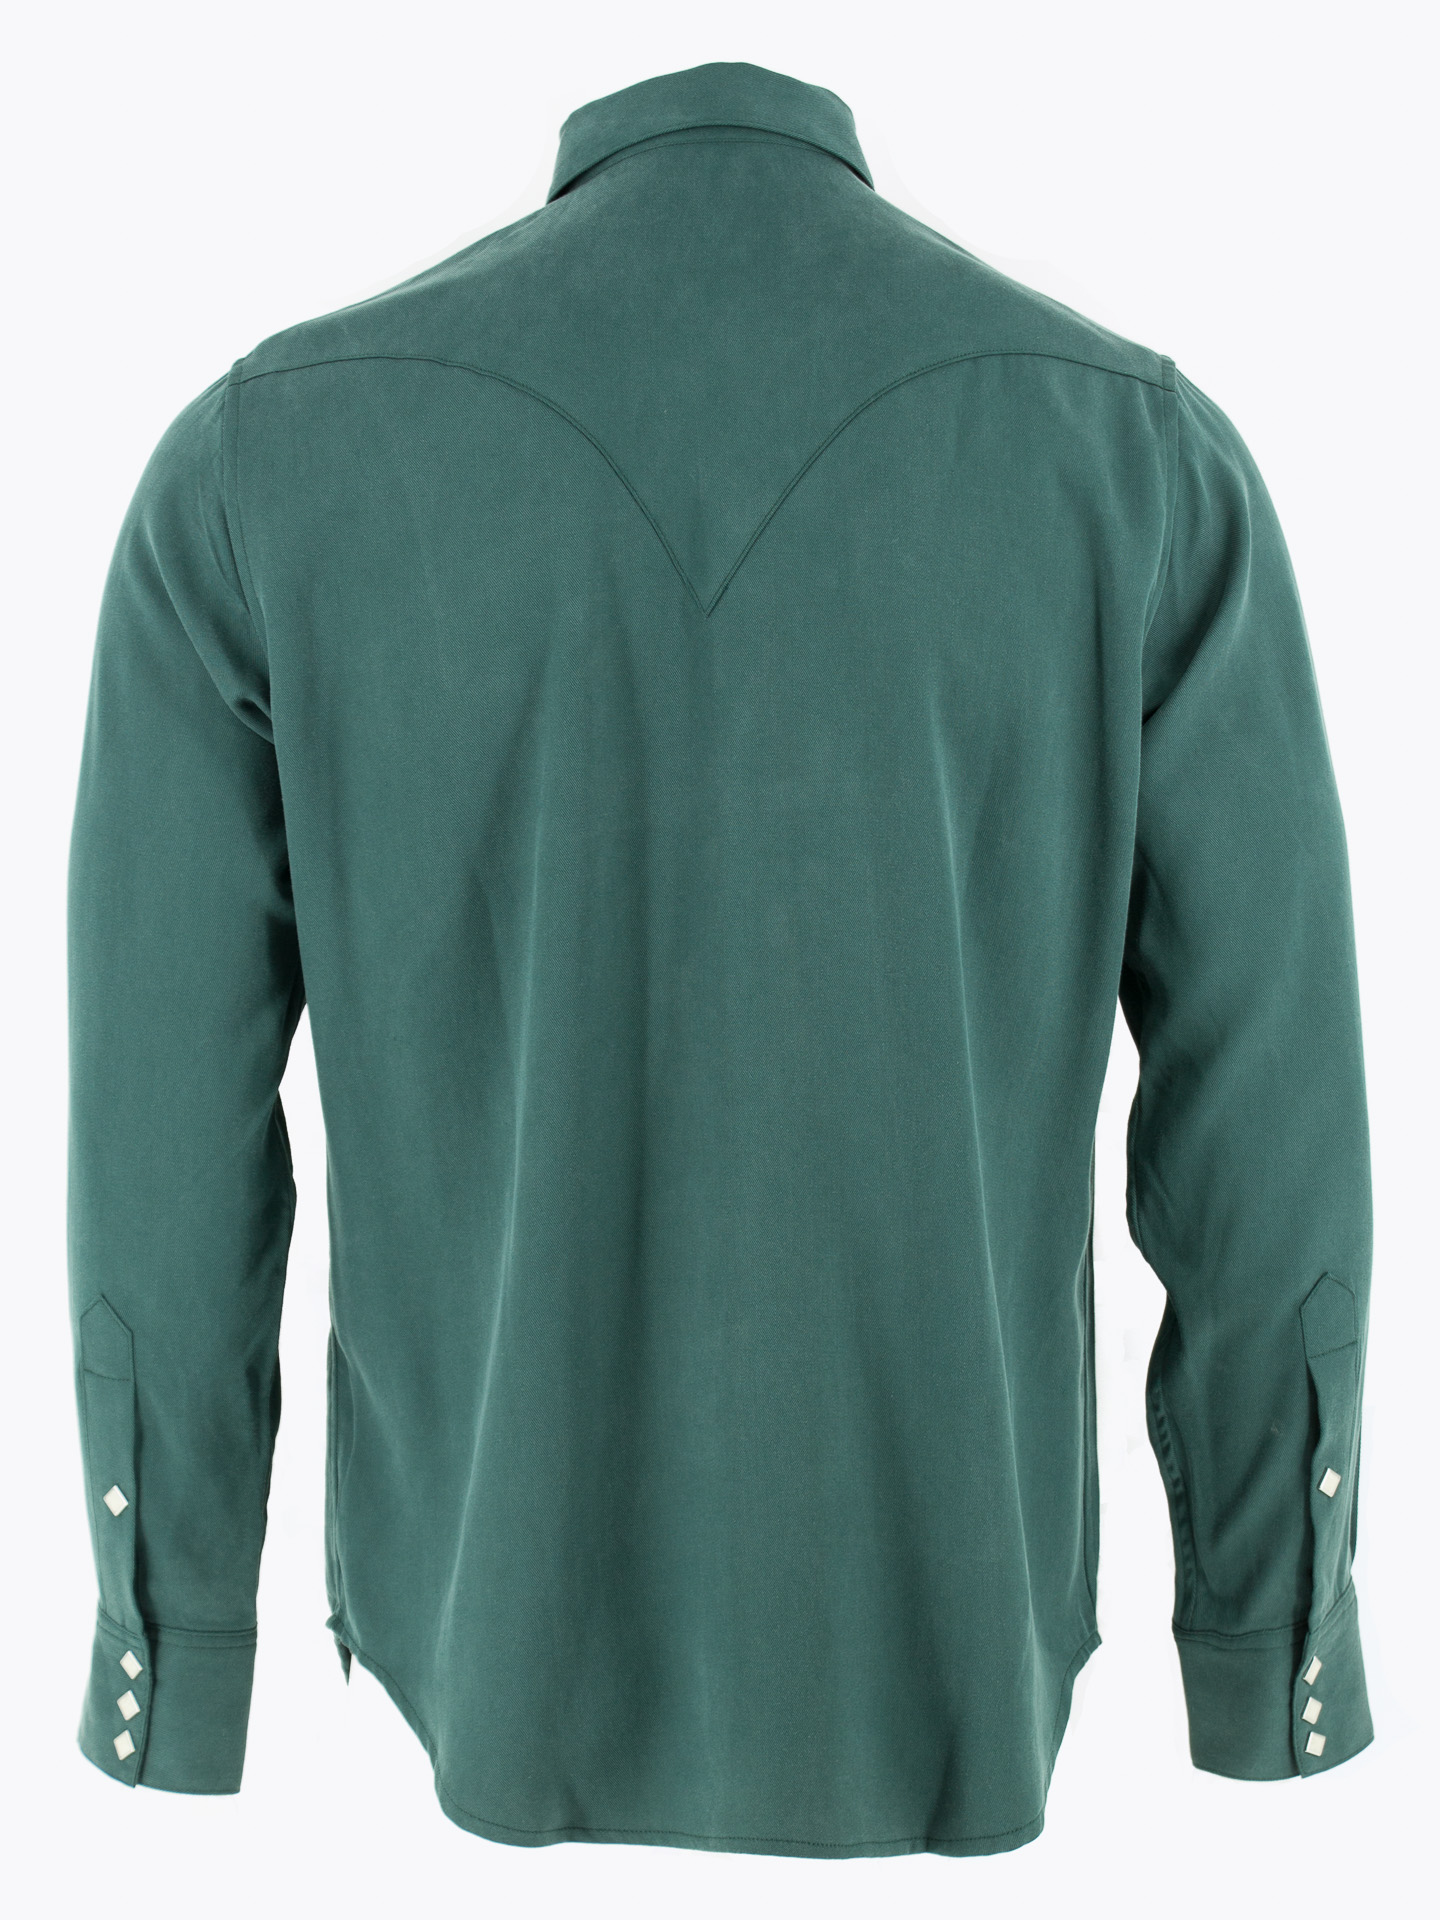 Sawtooth western shirt in 70s green Tencel